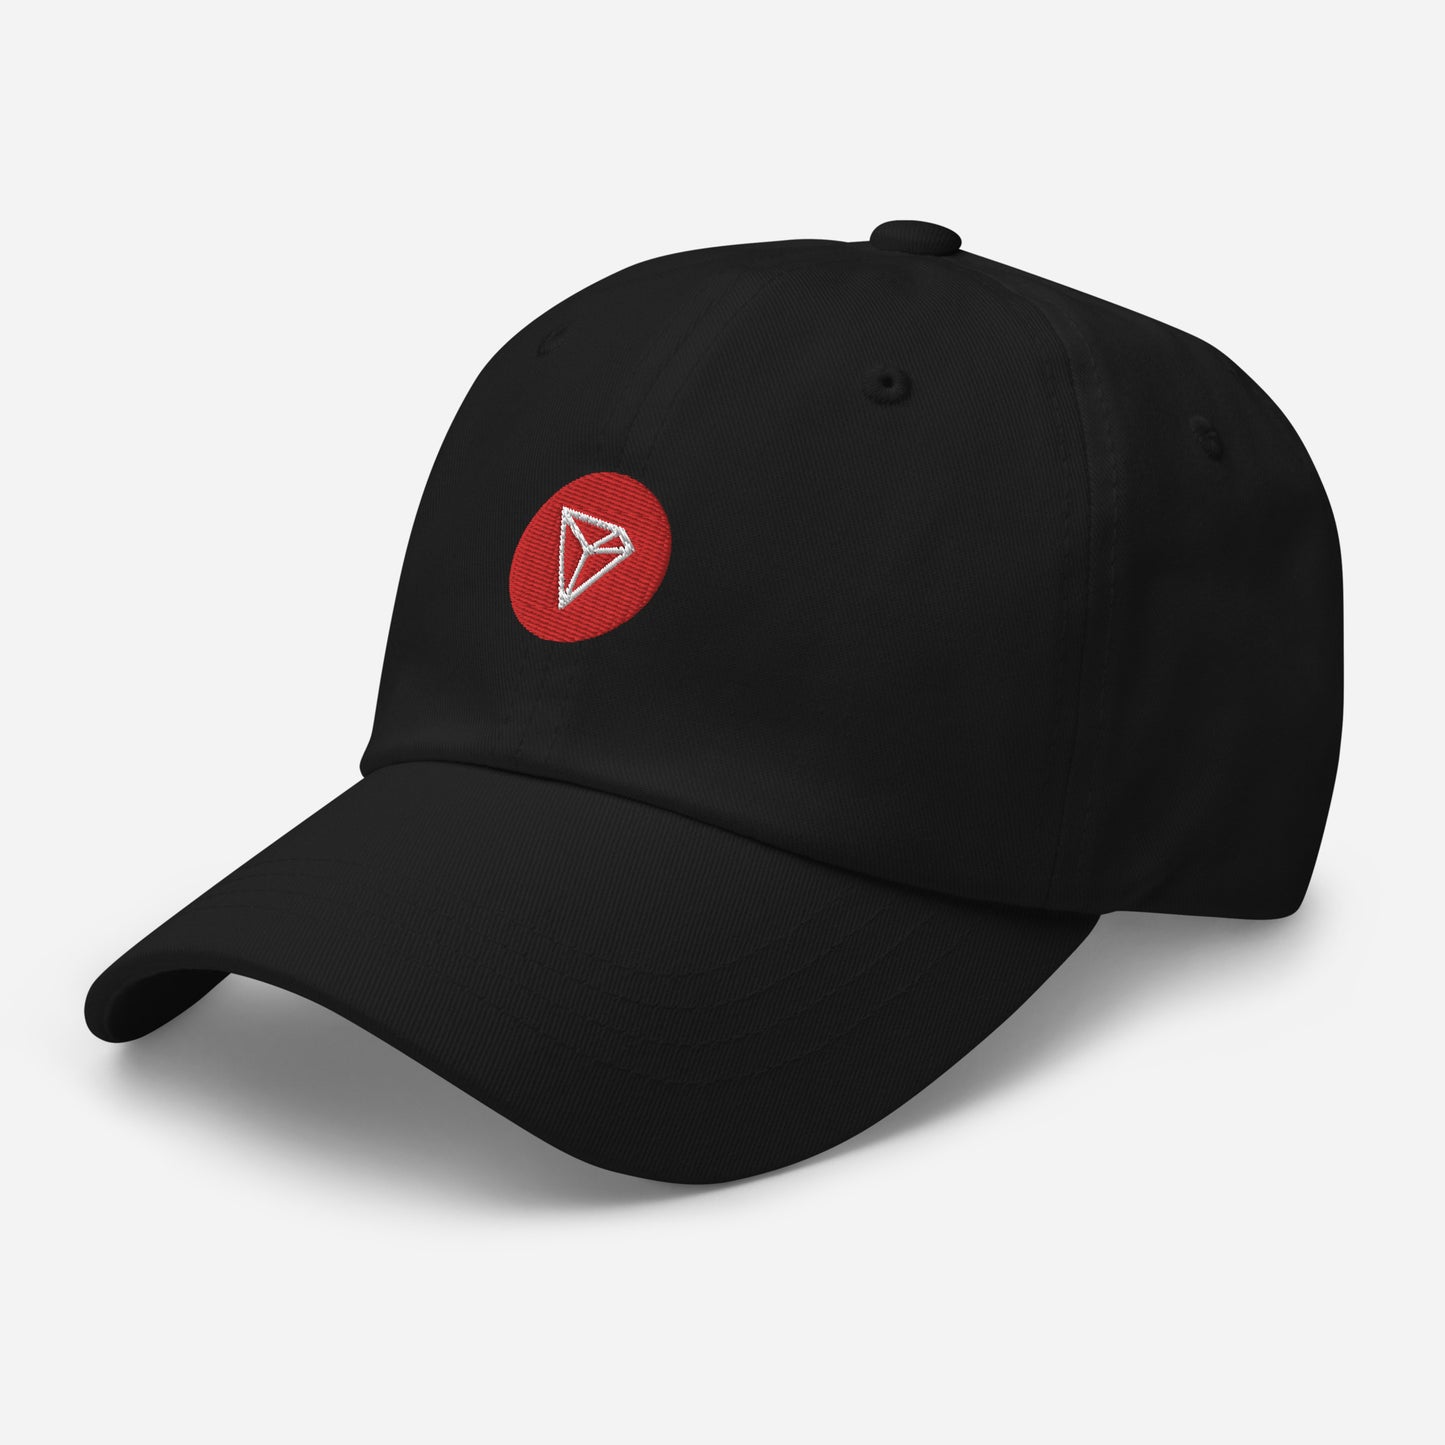 TRON (TRX) - Fitted baseball cap